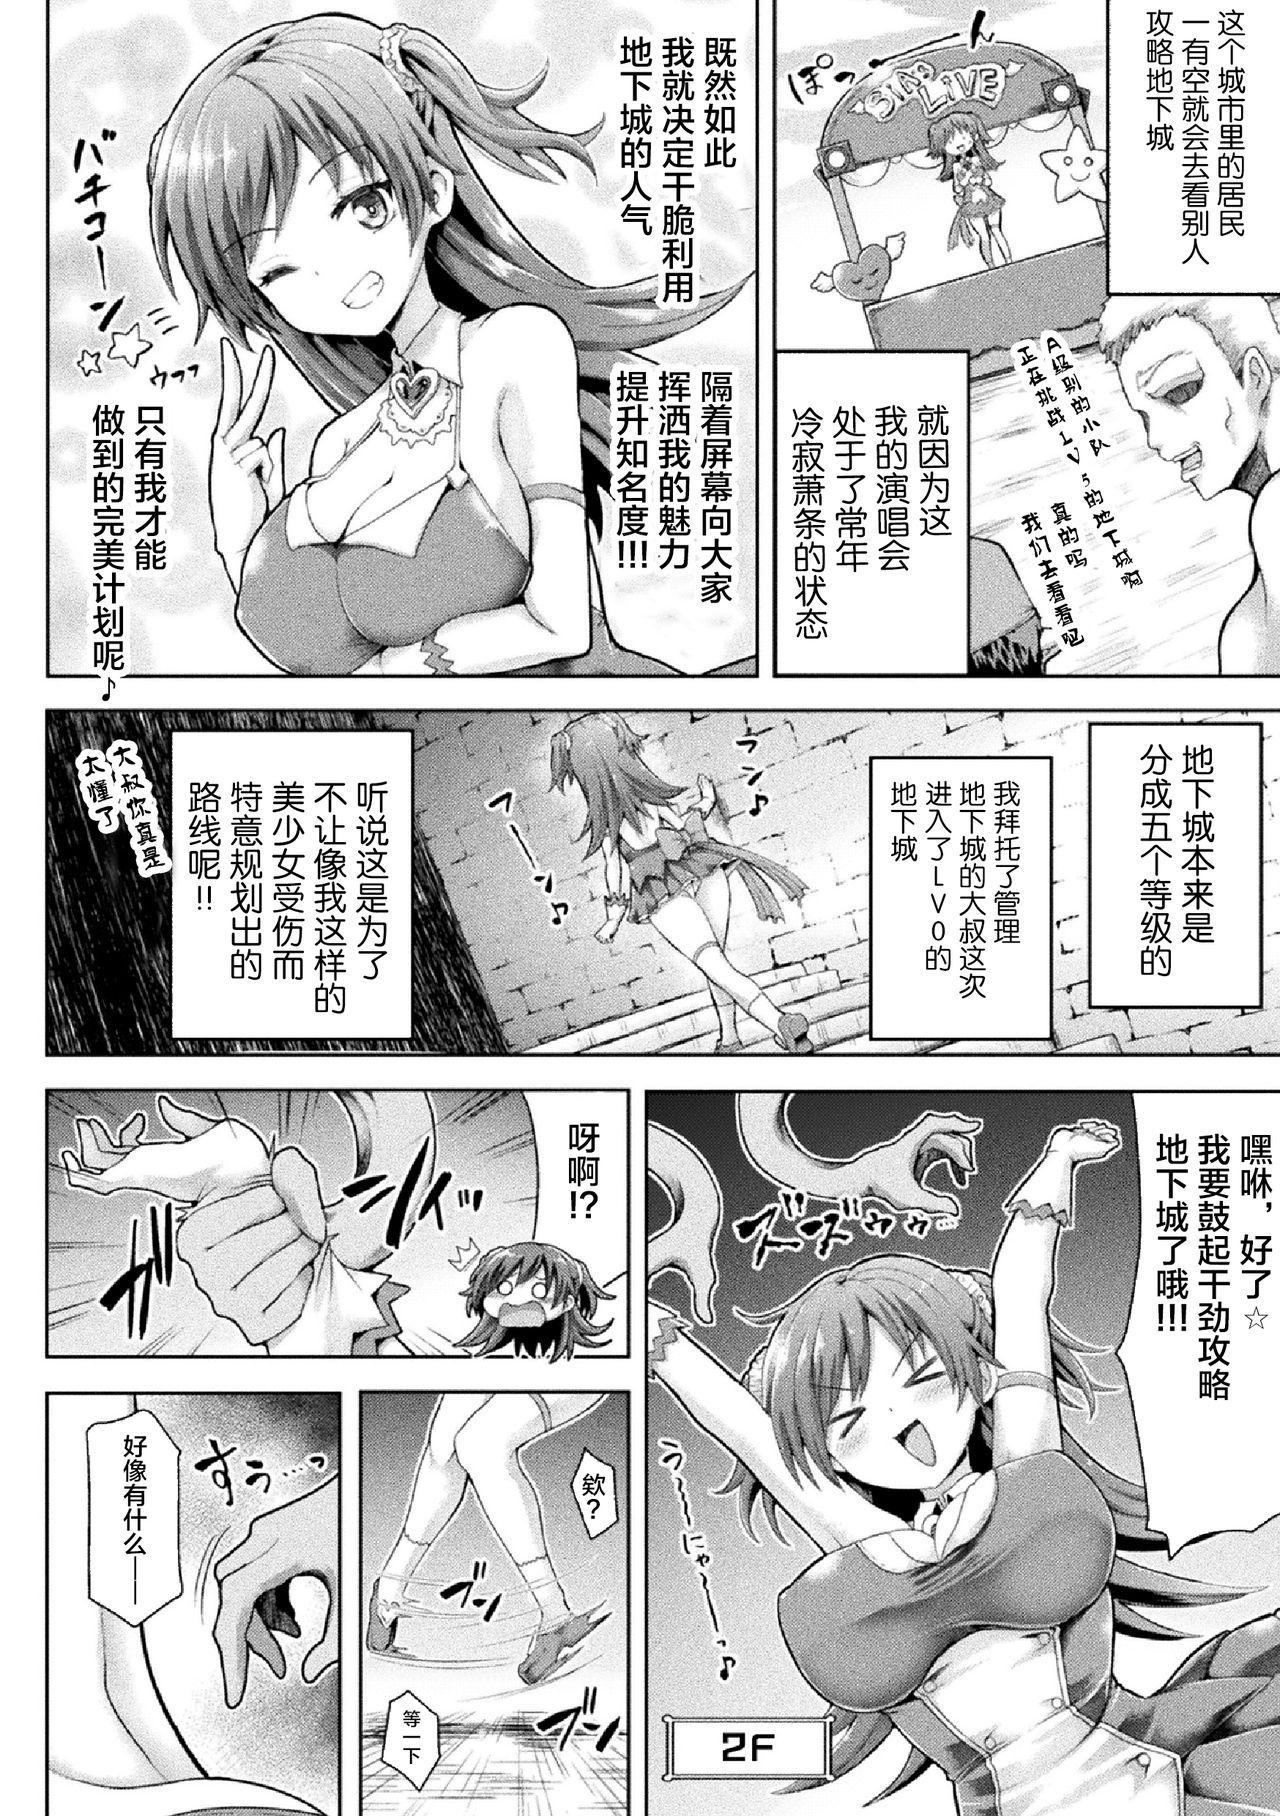 2D Comic Magazine Zecchou Kairaku ga Tomaranai Ero-Trap Dungeon Vol. 2 45